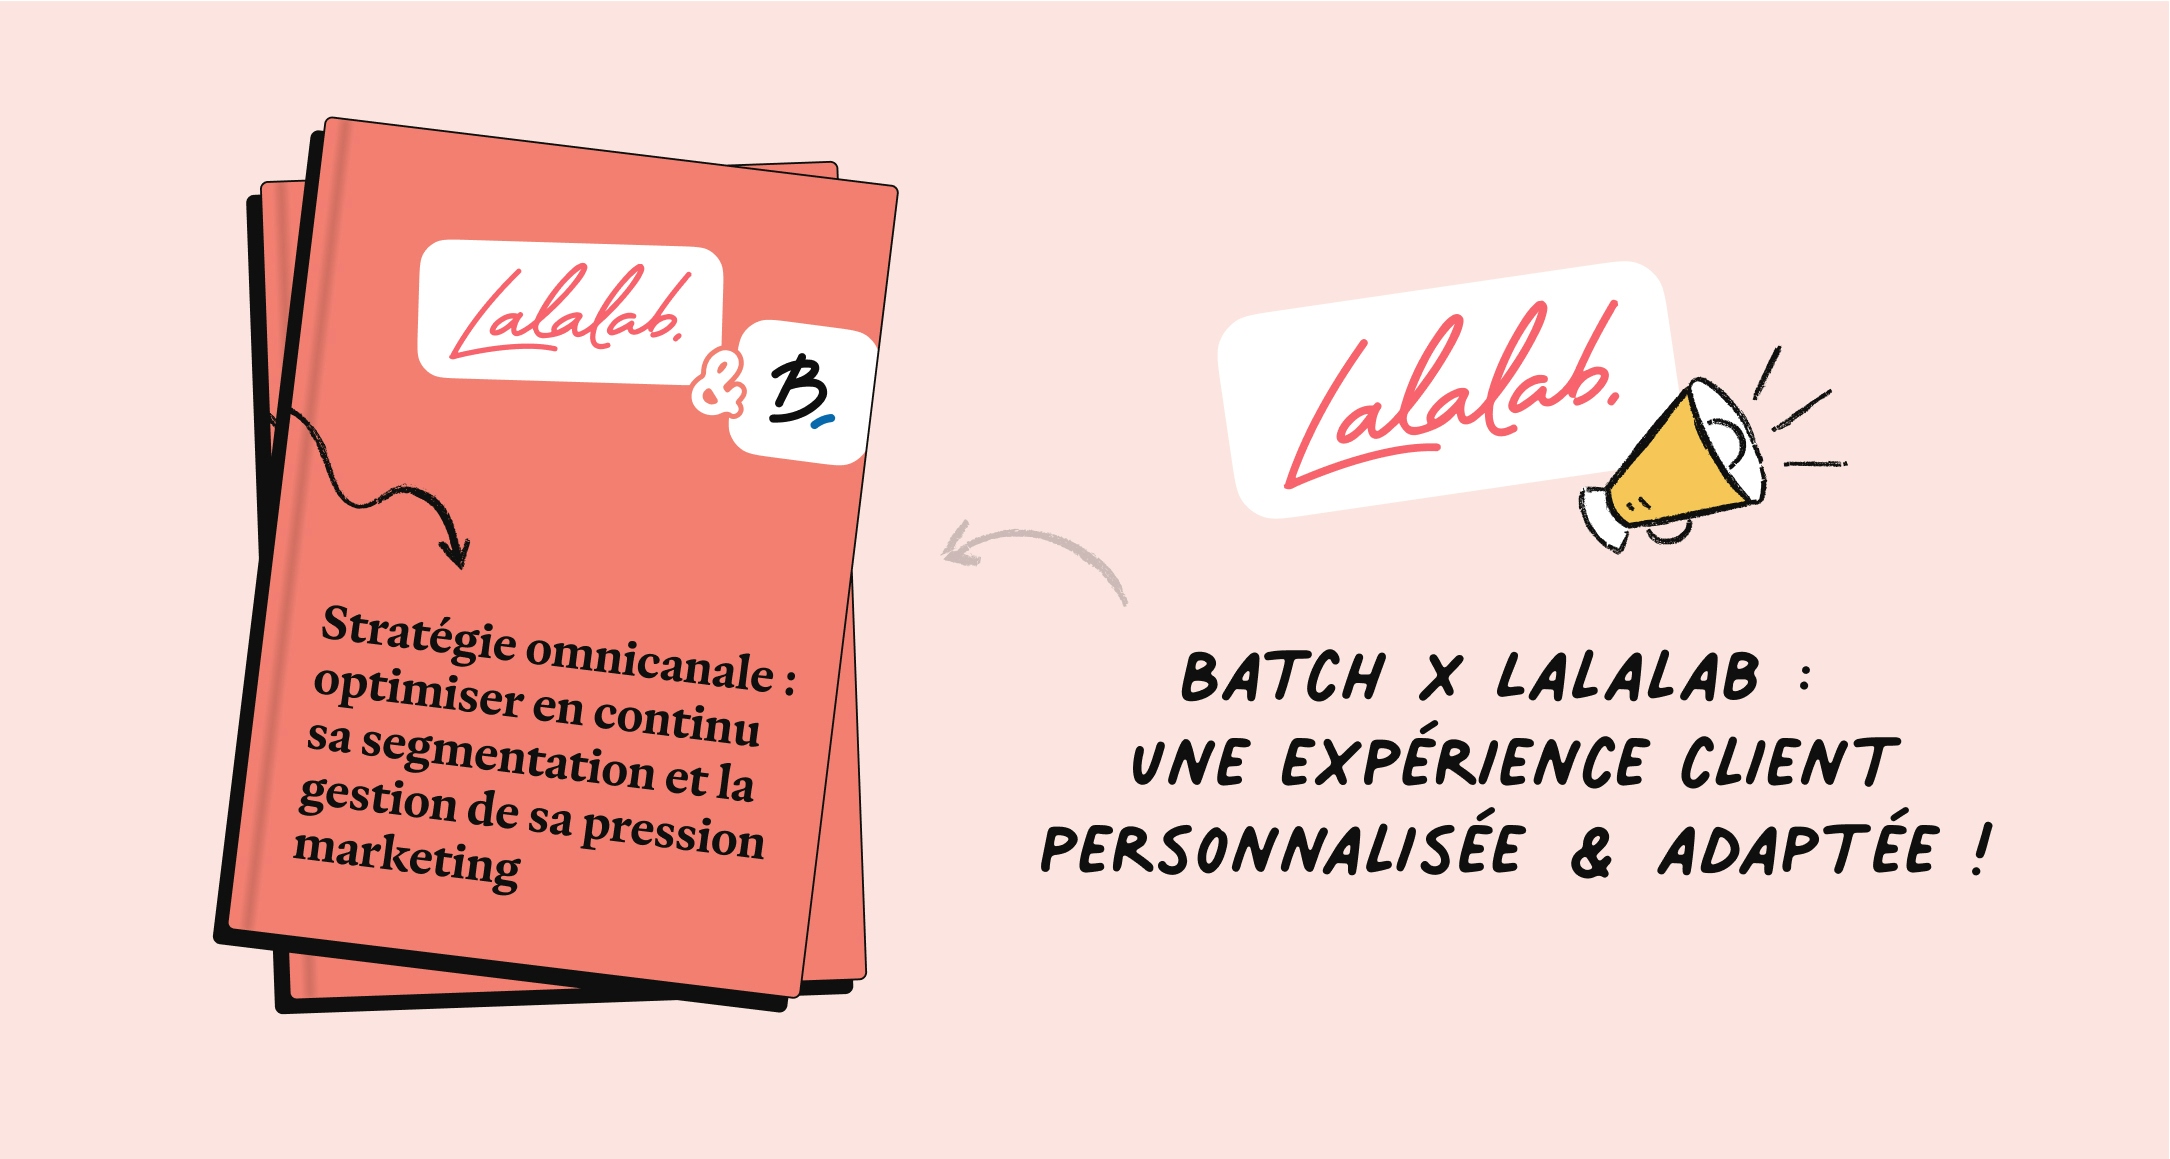 Comment Lalalab optimise sa segmentation et la gestion de sa pression Marketing ?